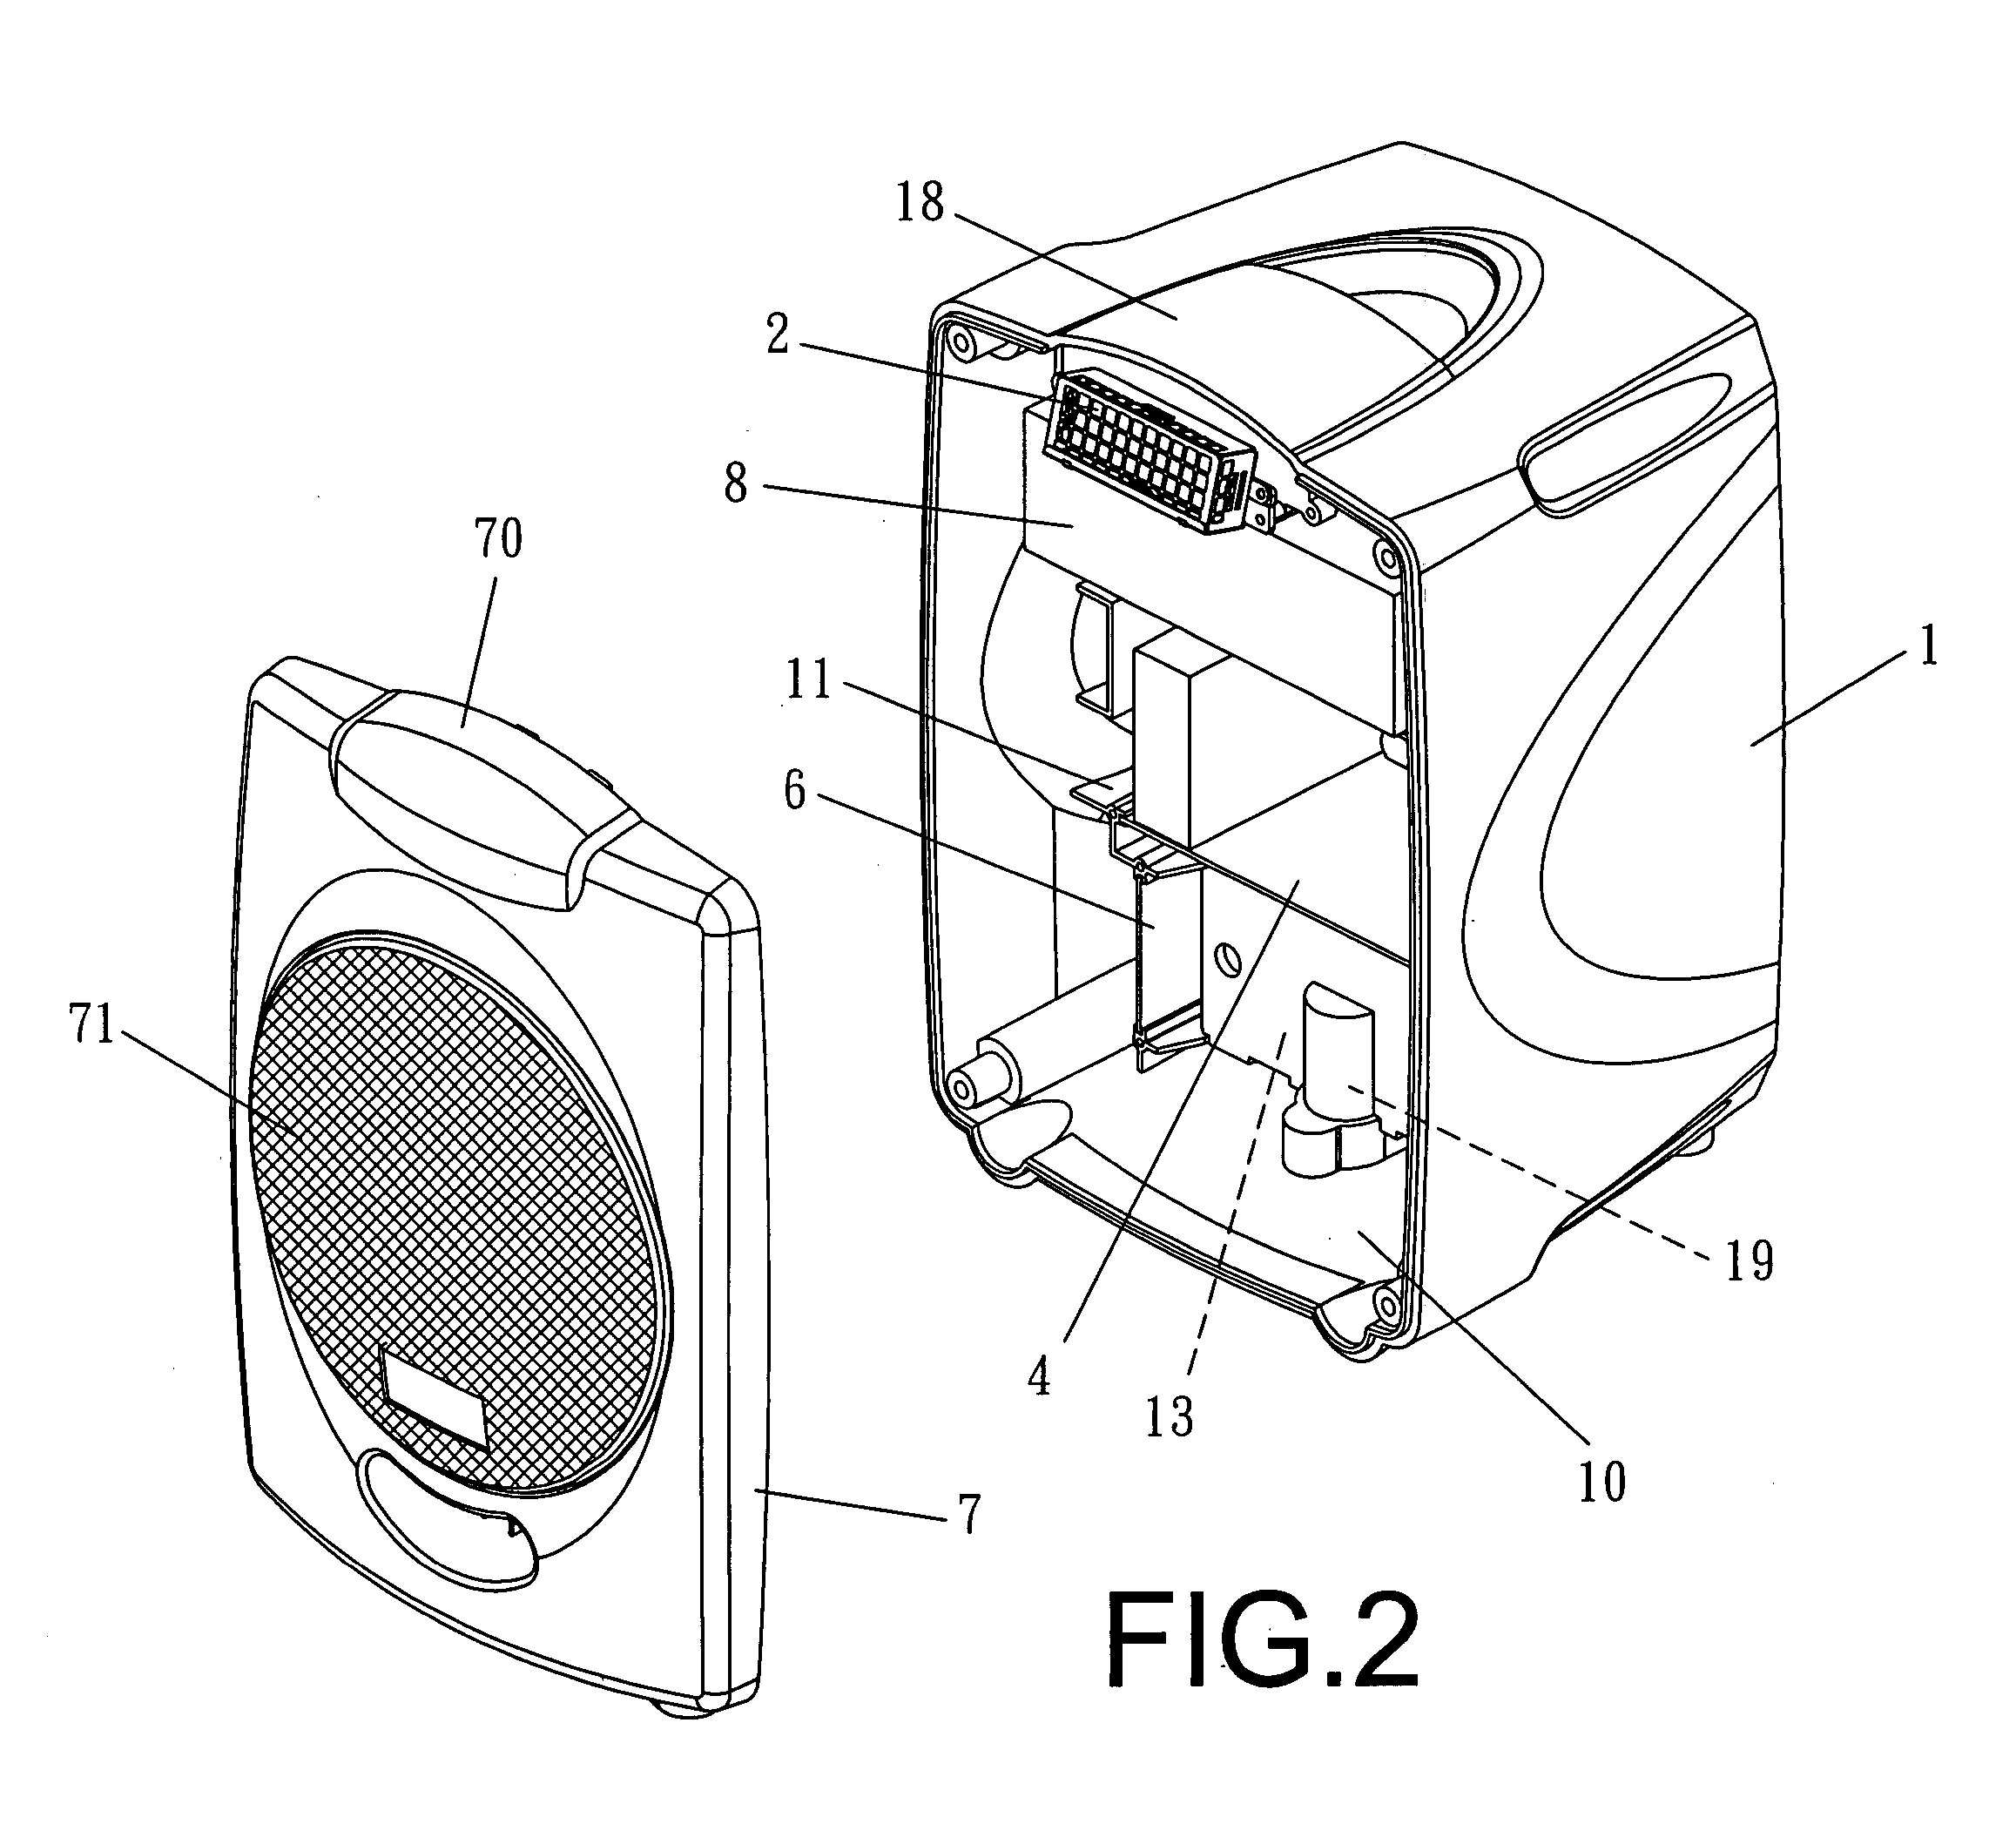 Hand-held wireless speaker